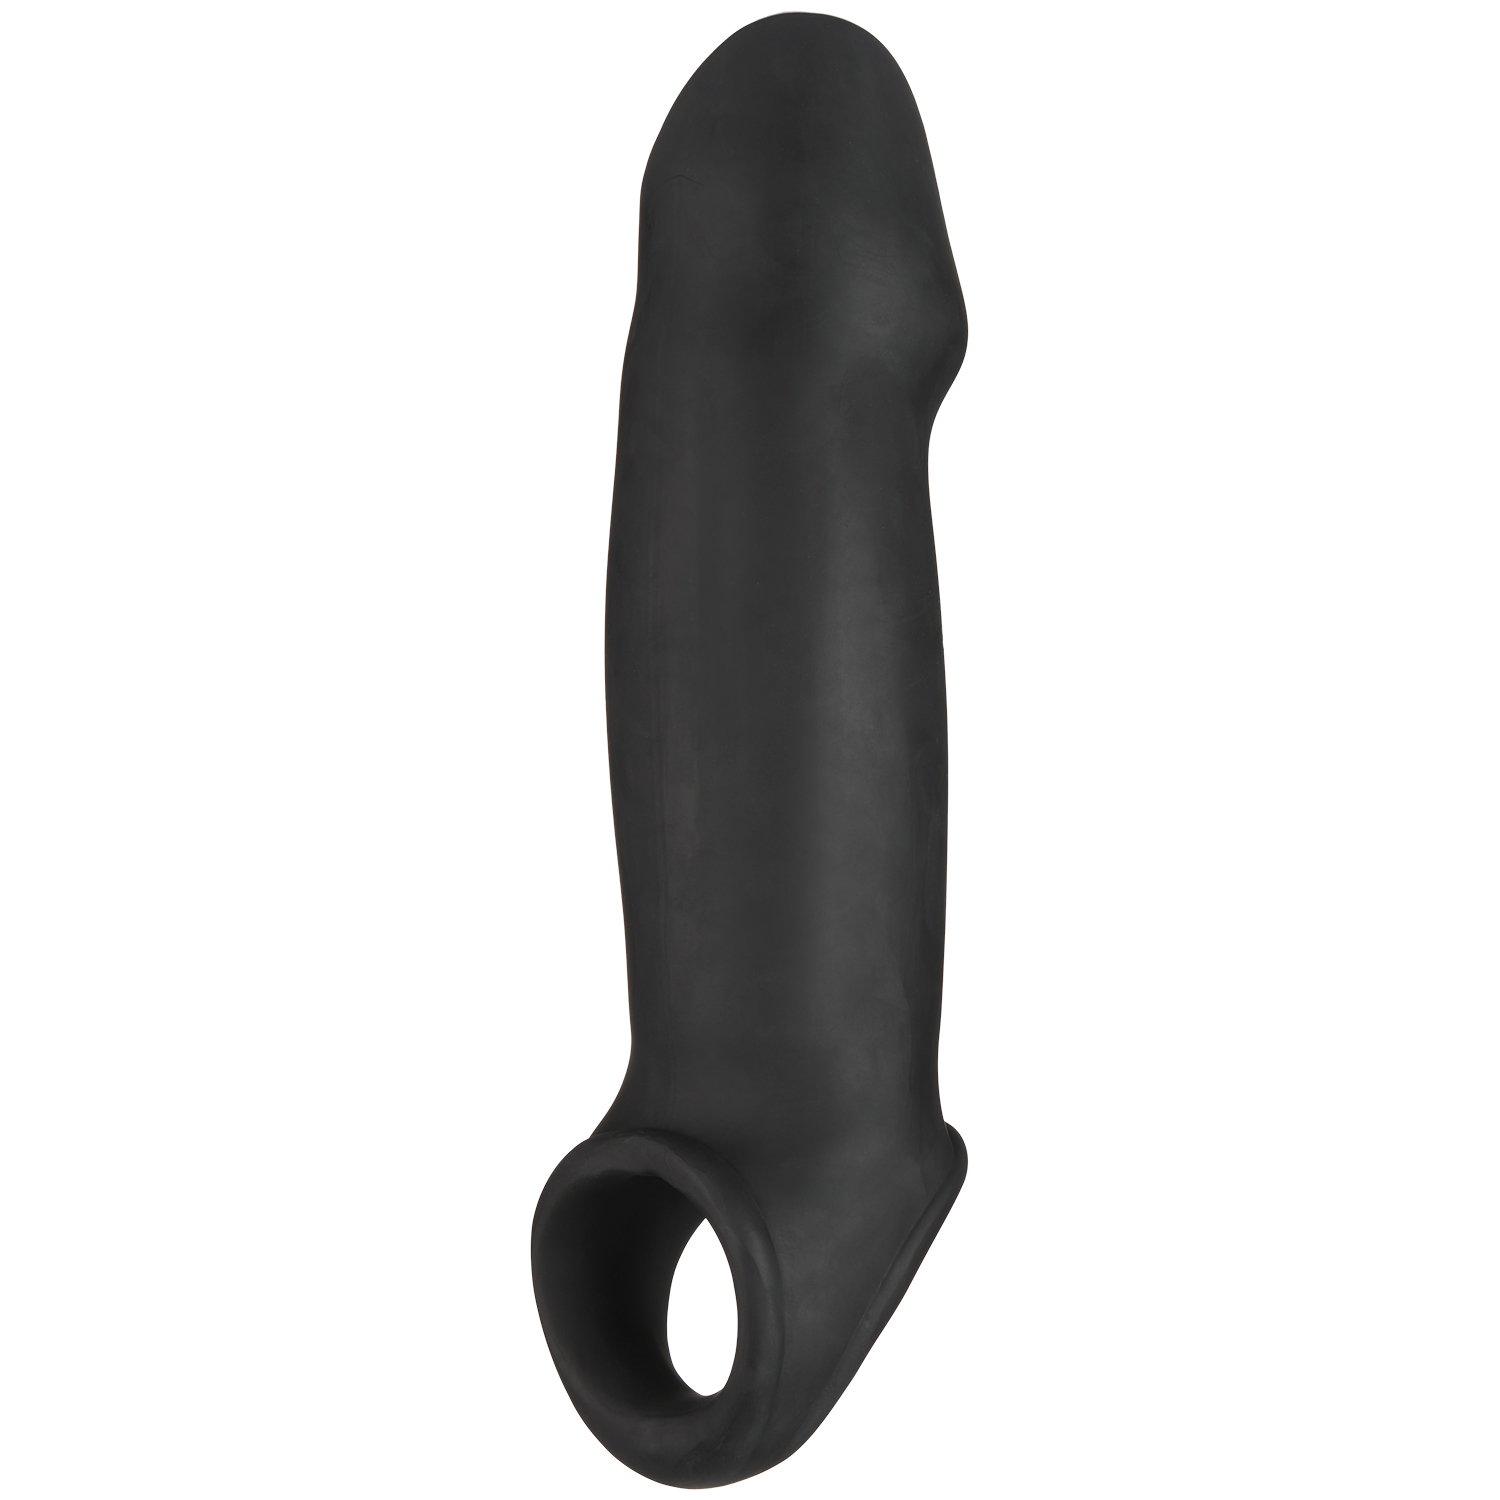 SONO No 17 Dong Extension Penis Sleeve - Klar